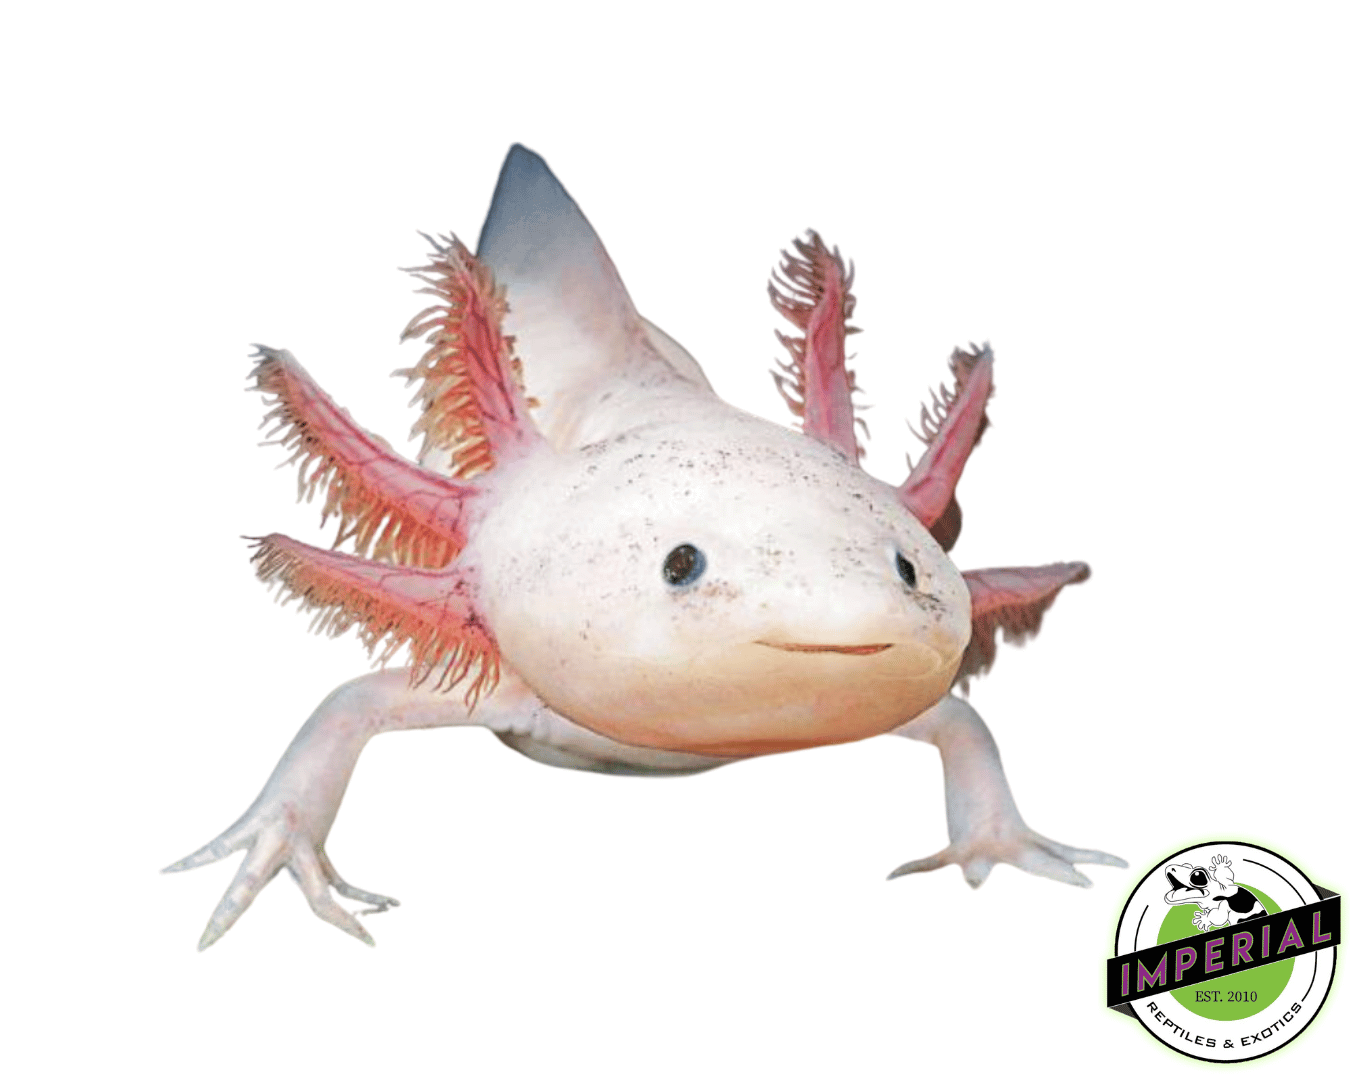 buy axolotl online at cheap prices, axolotls for sale near me